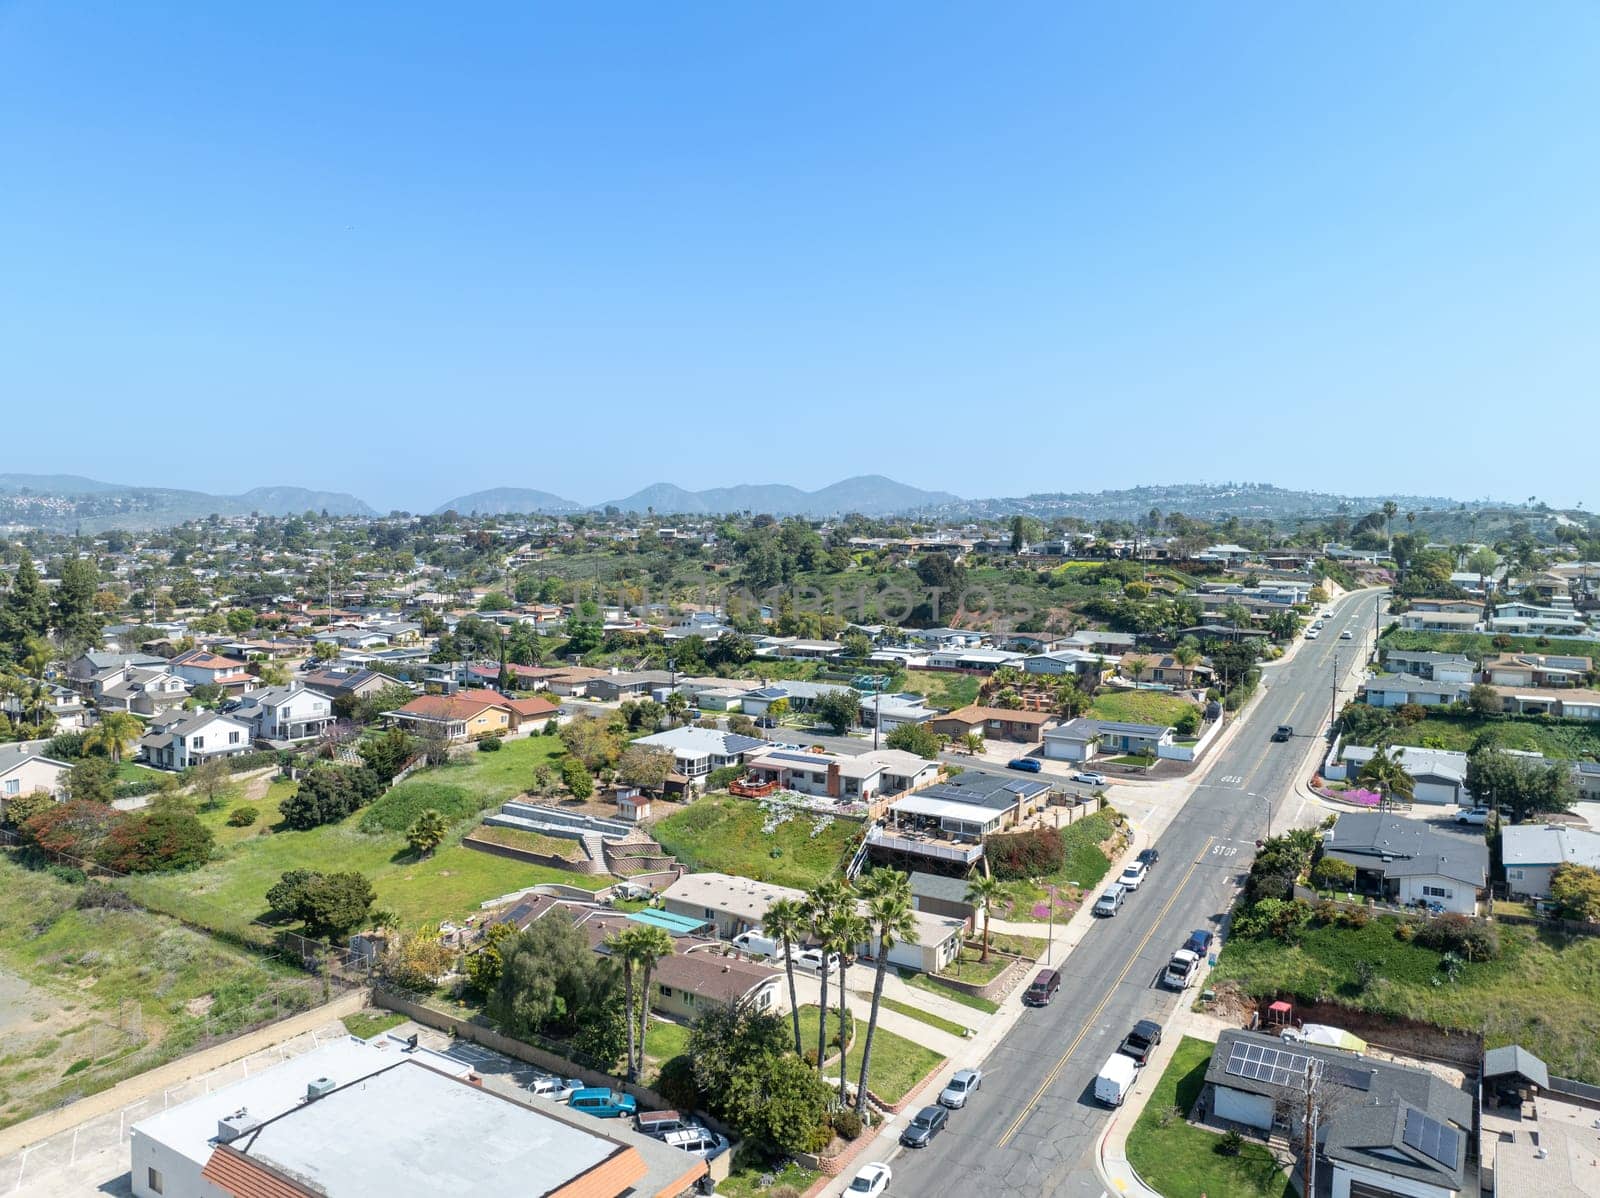 Aerial view of house in San Diego suburb, California, USA by Bonandbon